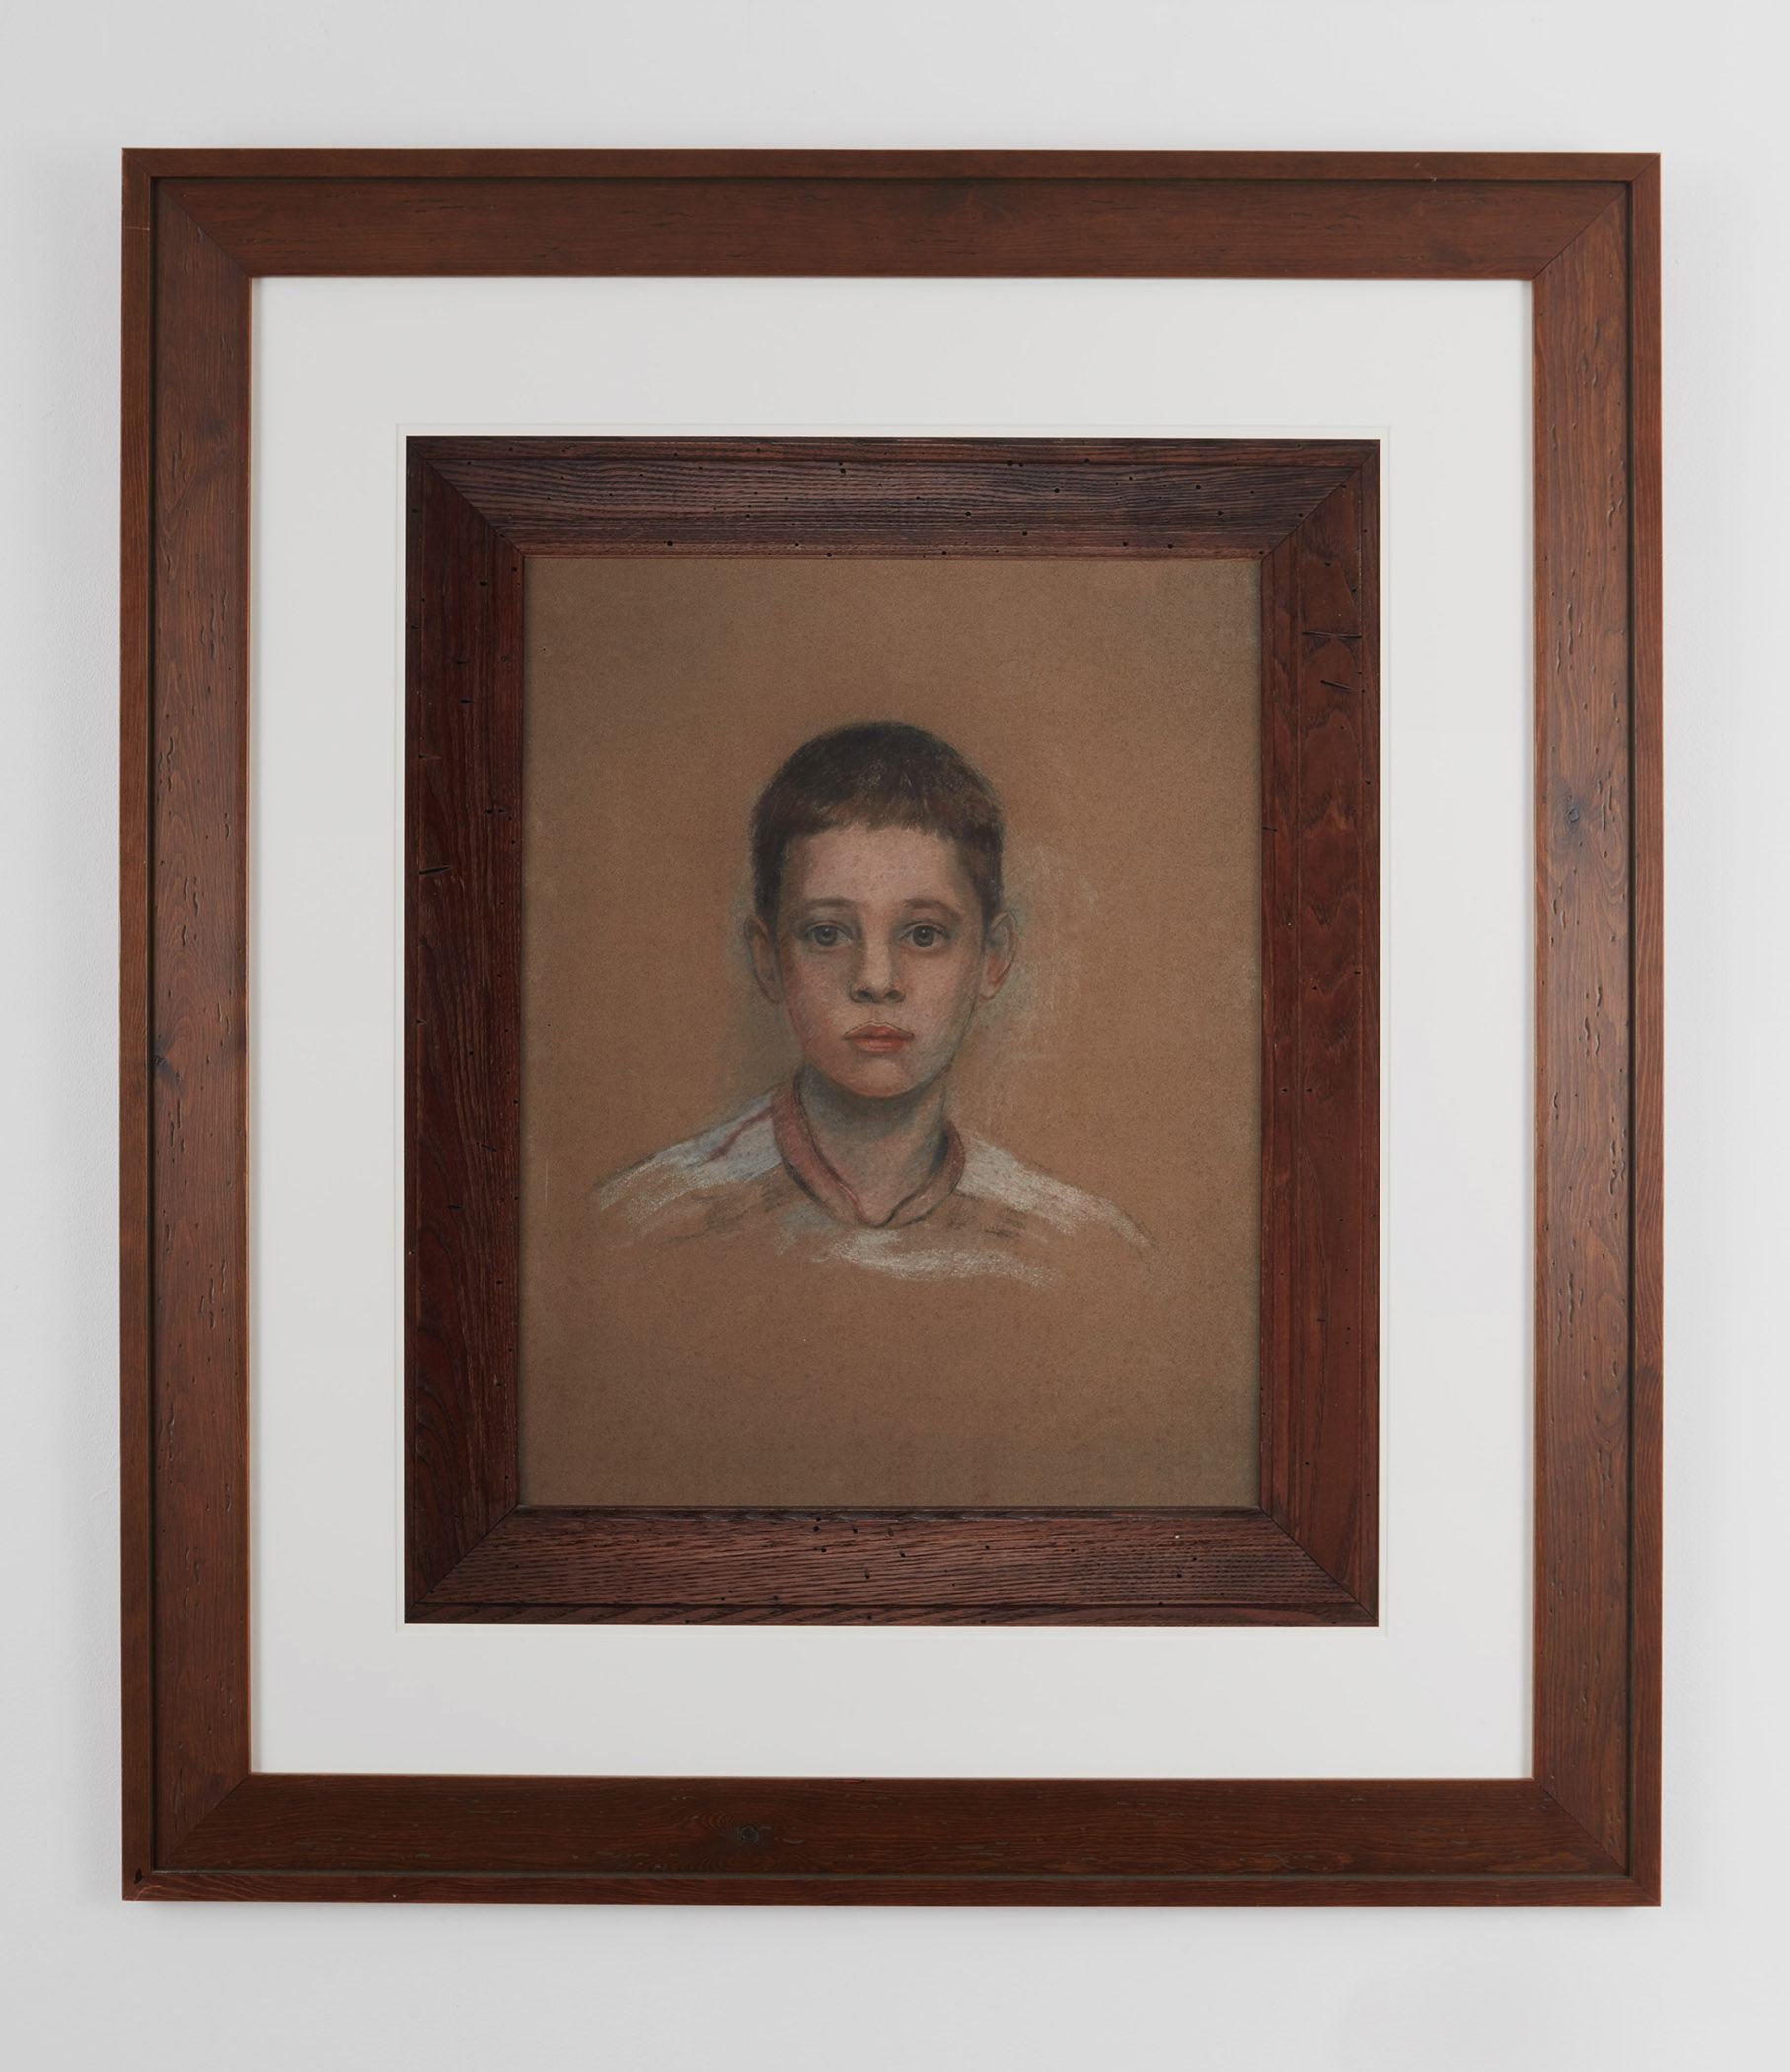 John Waters, John Jr., c-print, framed, 103 x 88 cm, 2009